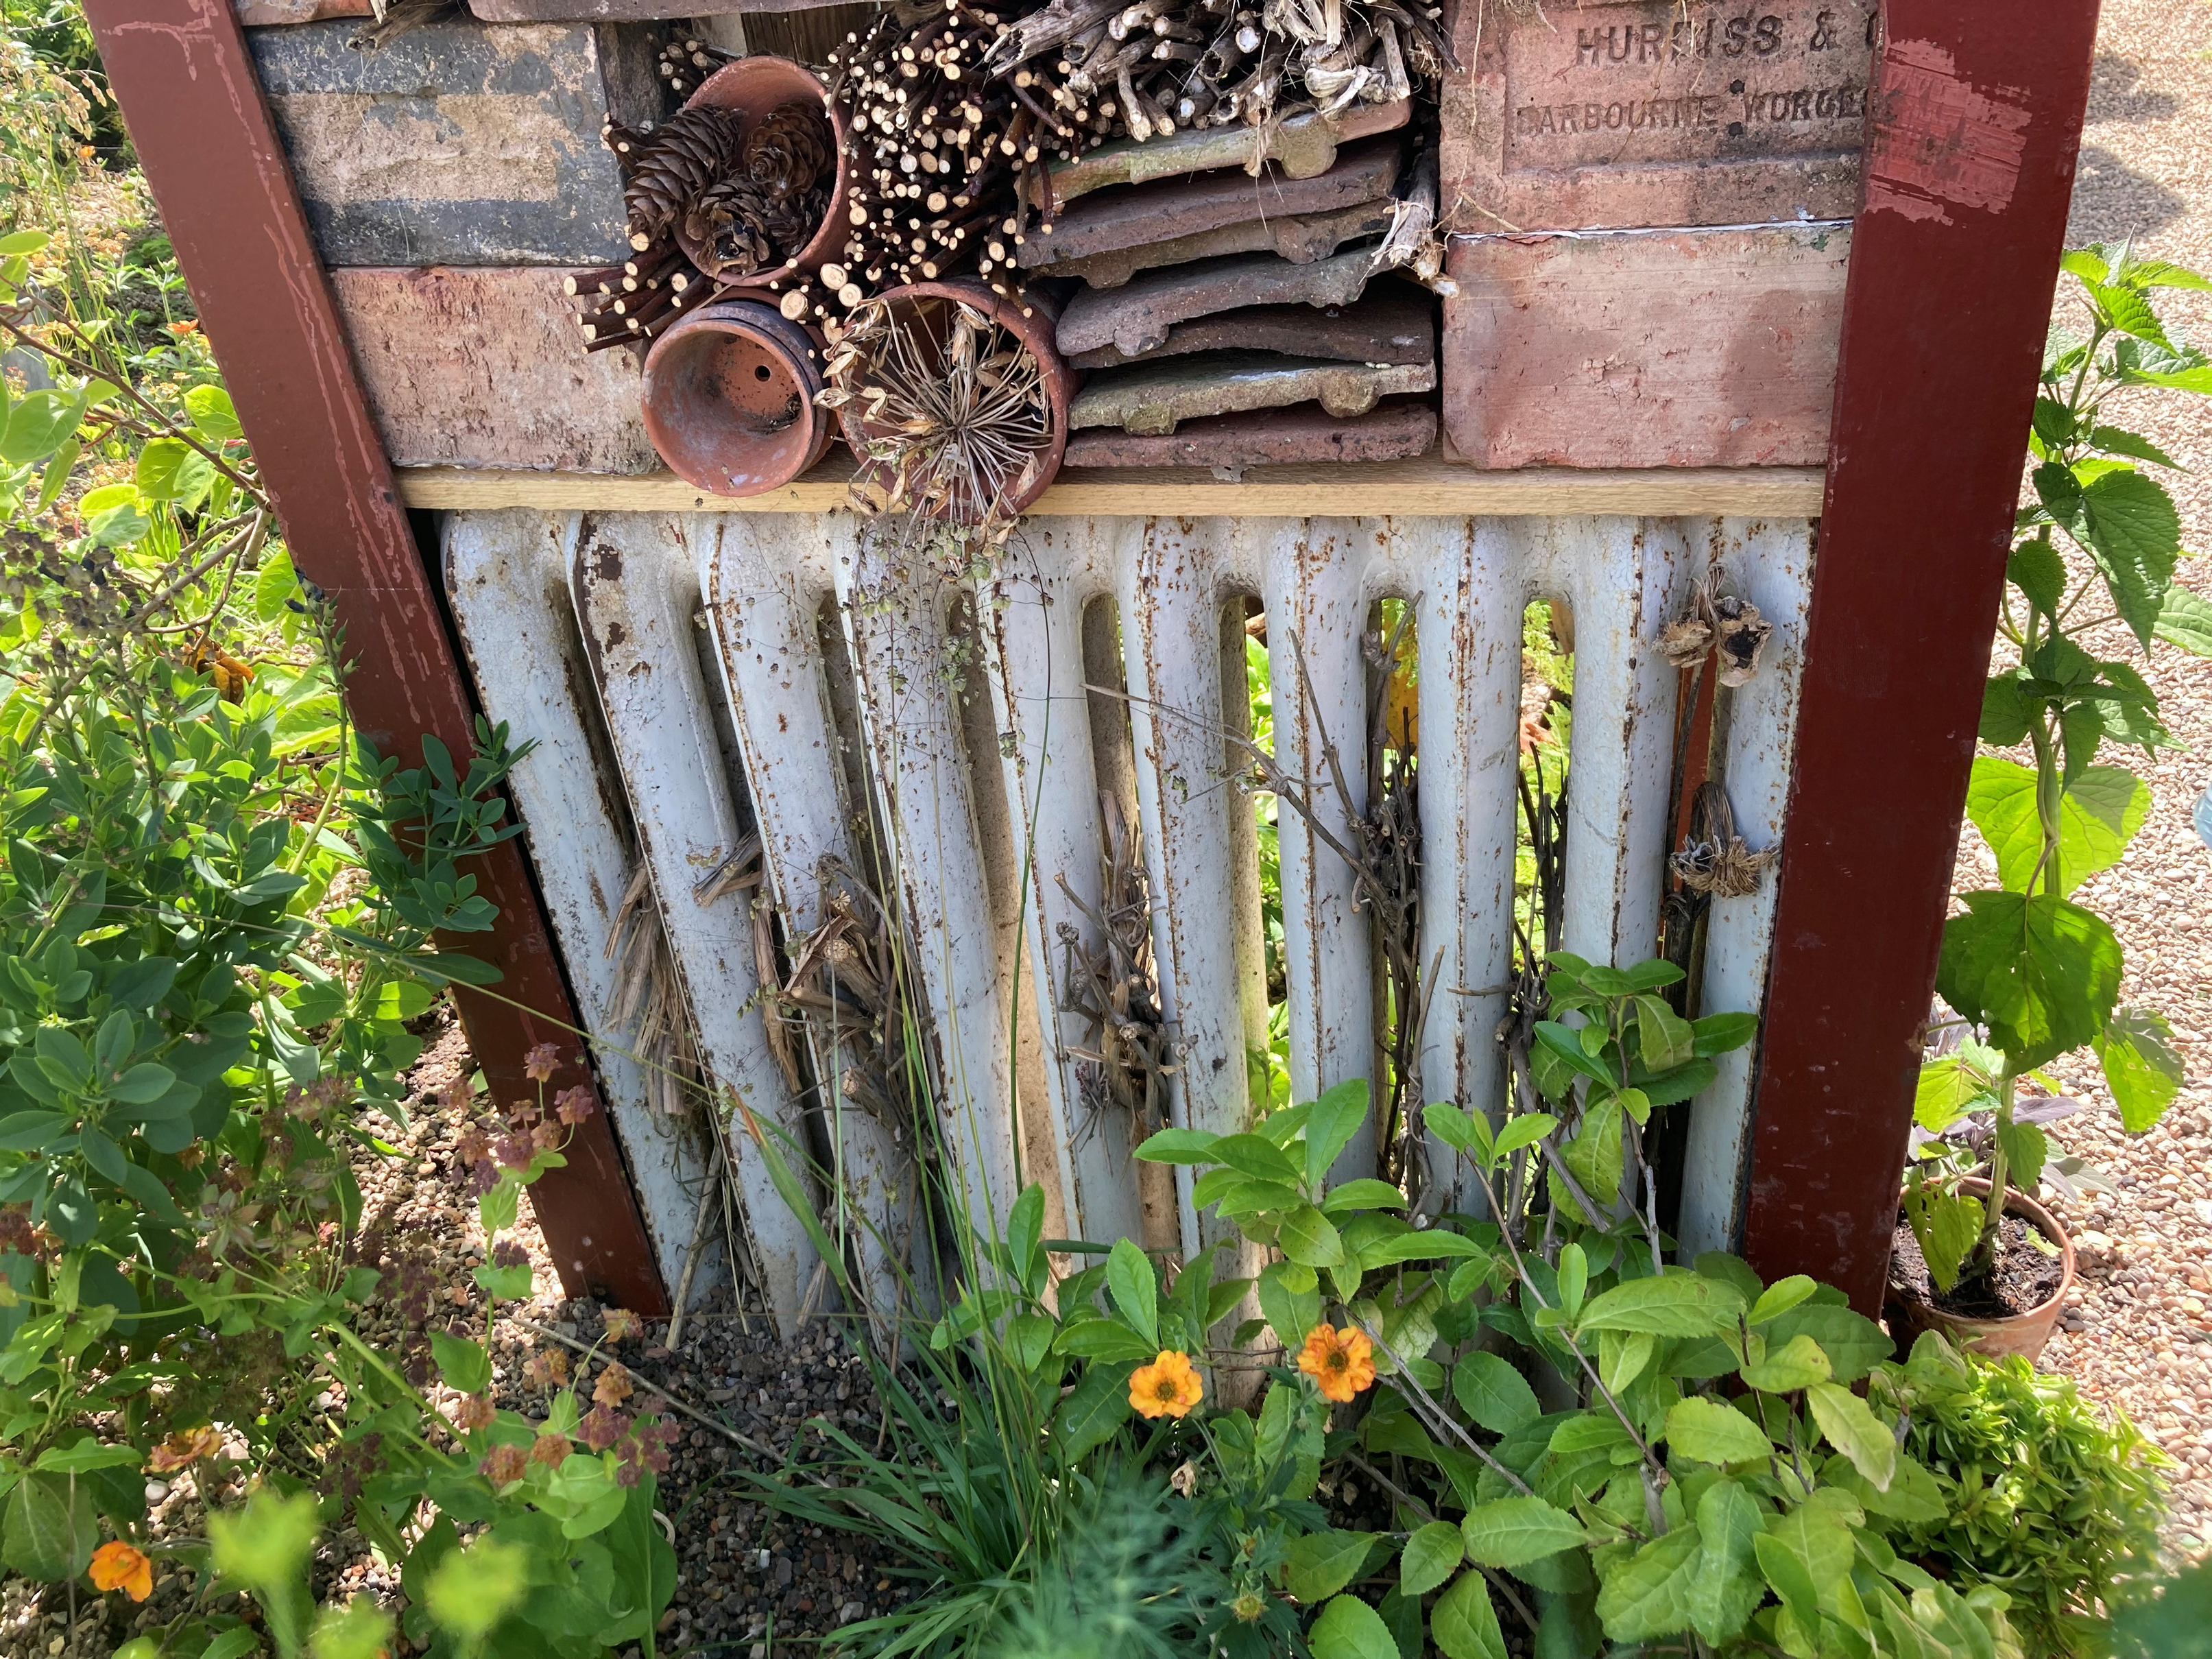 An old radiator adapted into a bug hotel (Hannah Stephenson/PA)